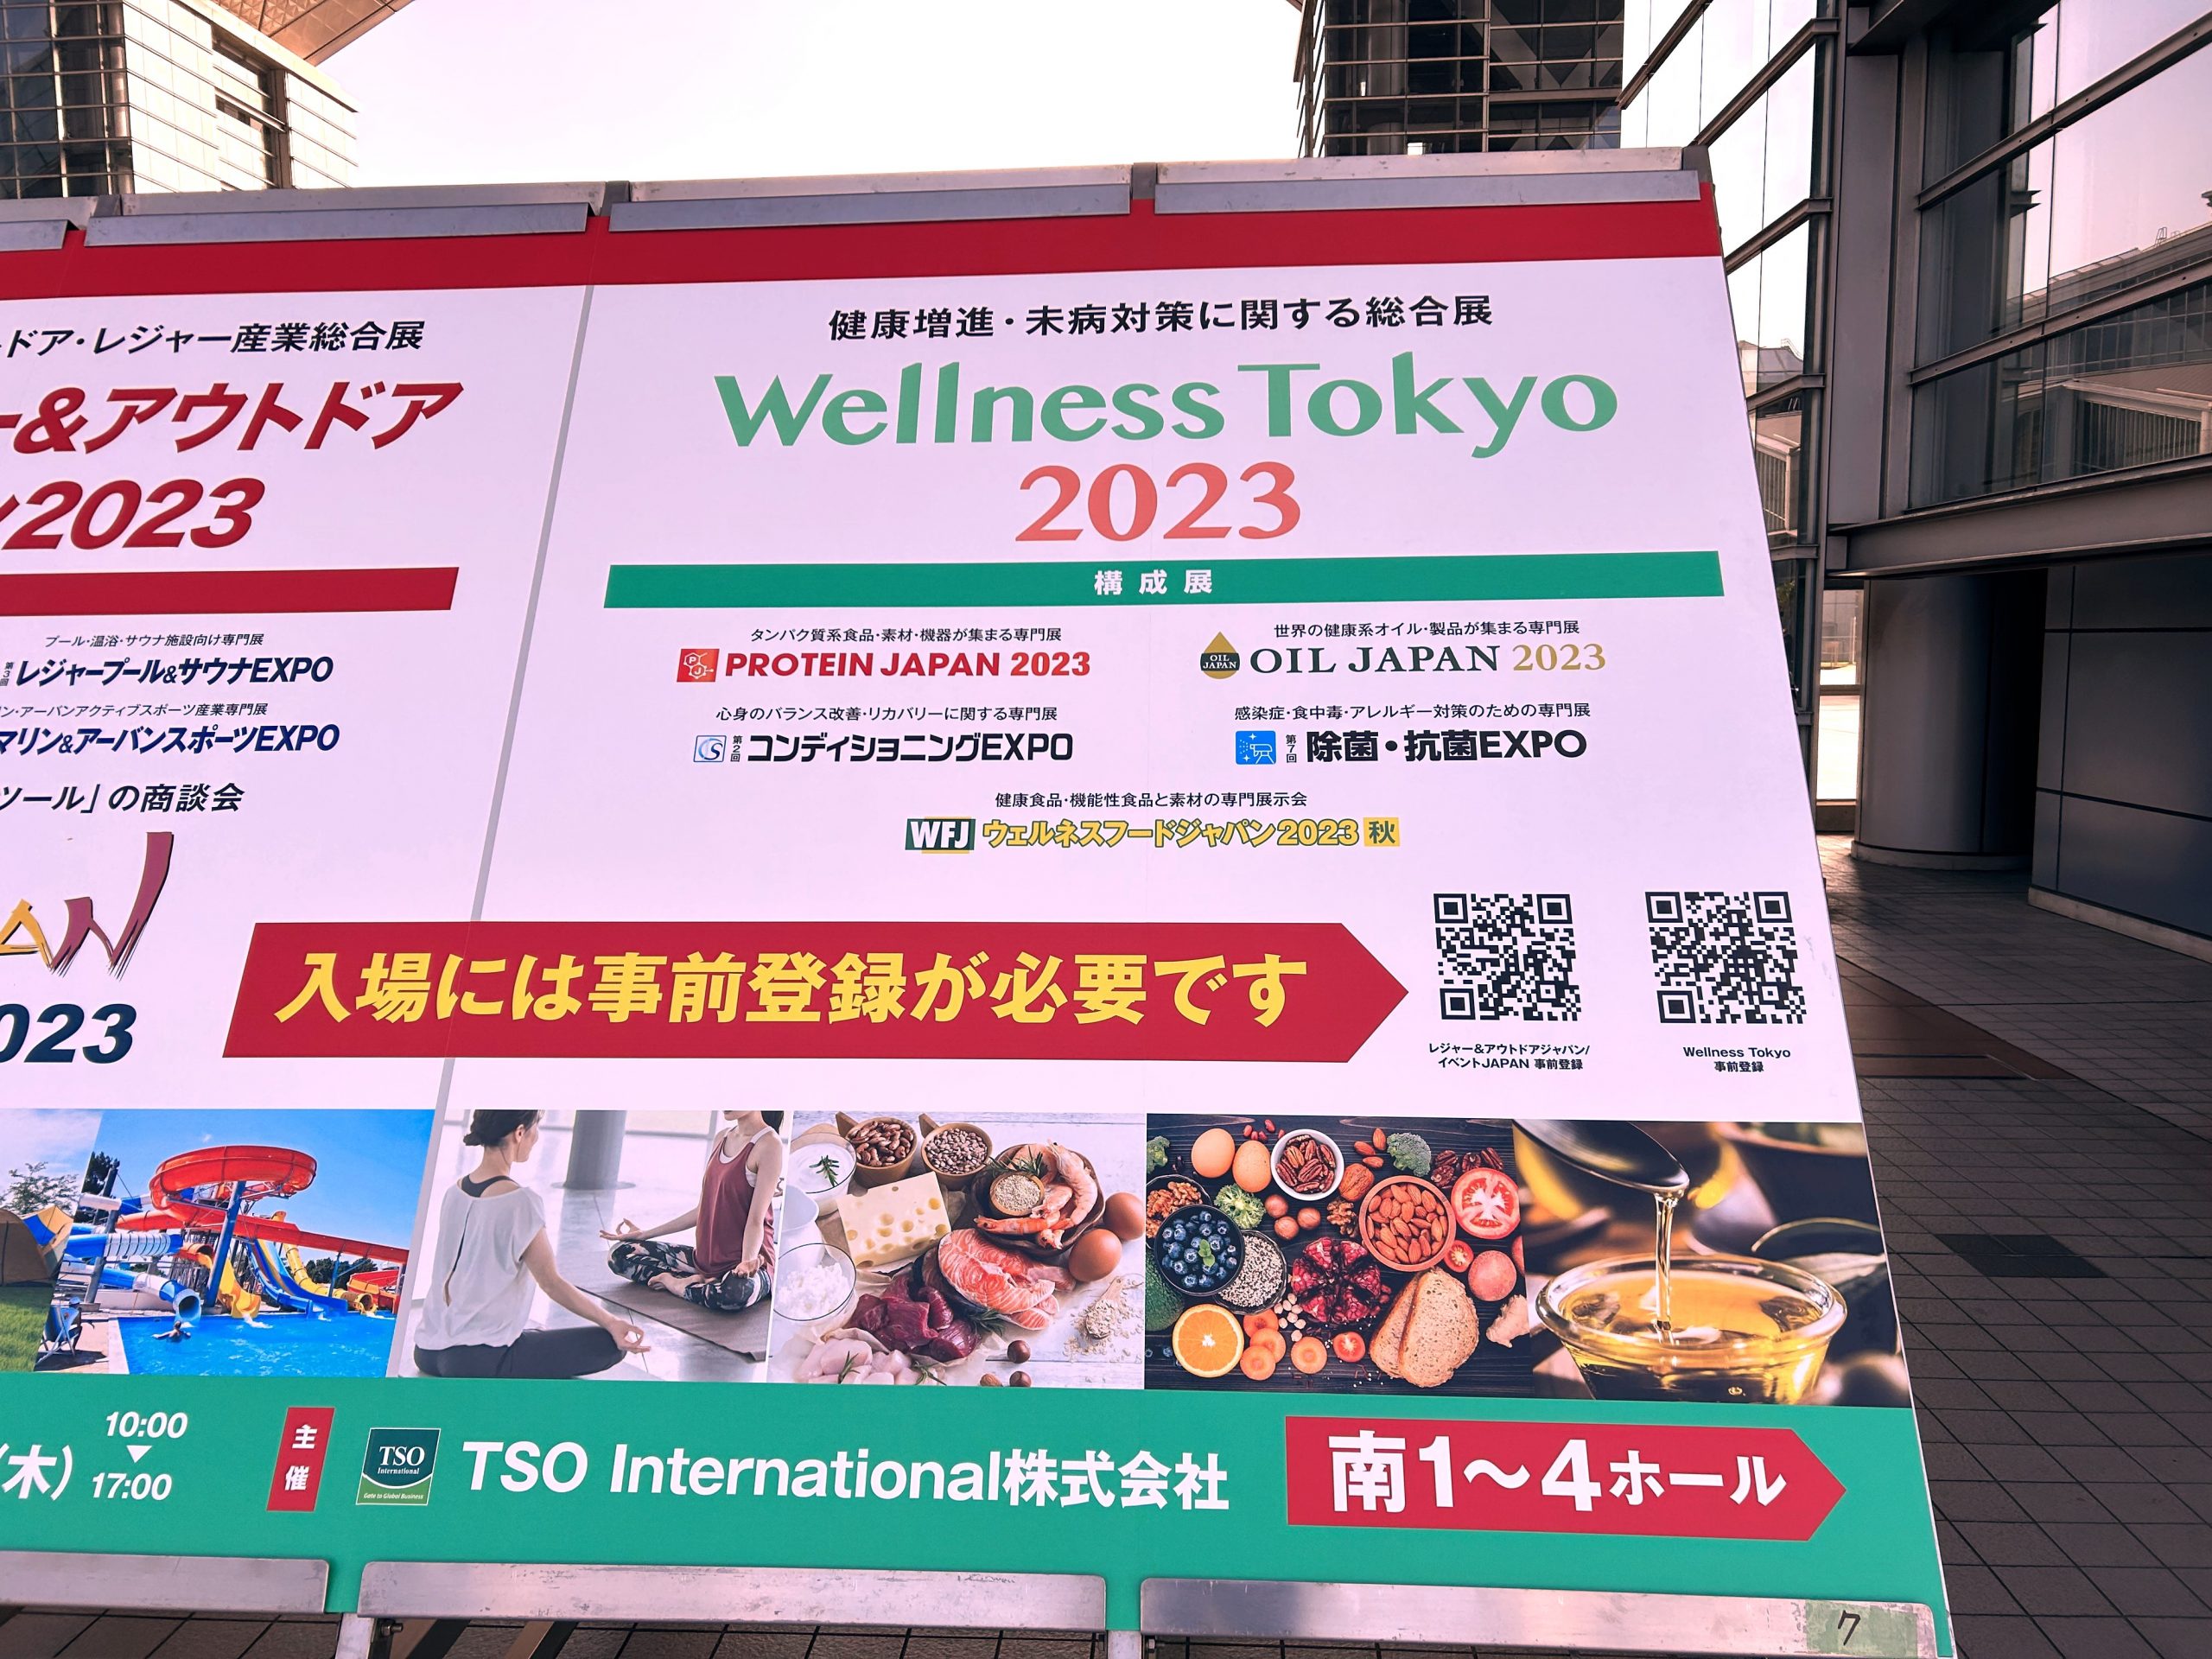 「Wellness Tokyo 2023」に出展致しました。<br>ご来場いただきました皆様、誠にありがとうございました。